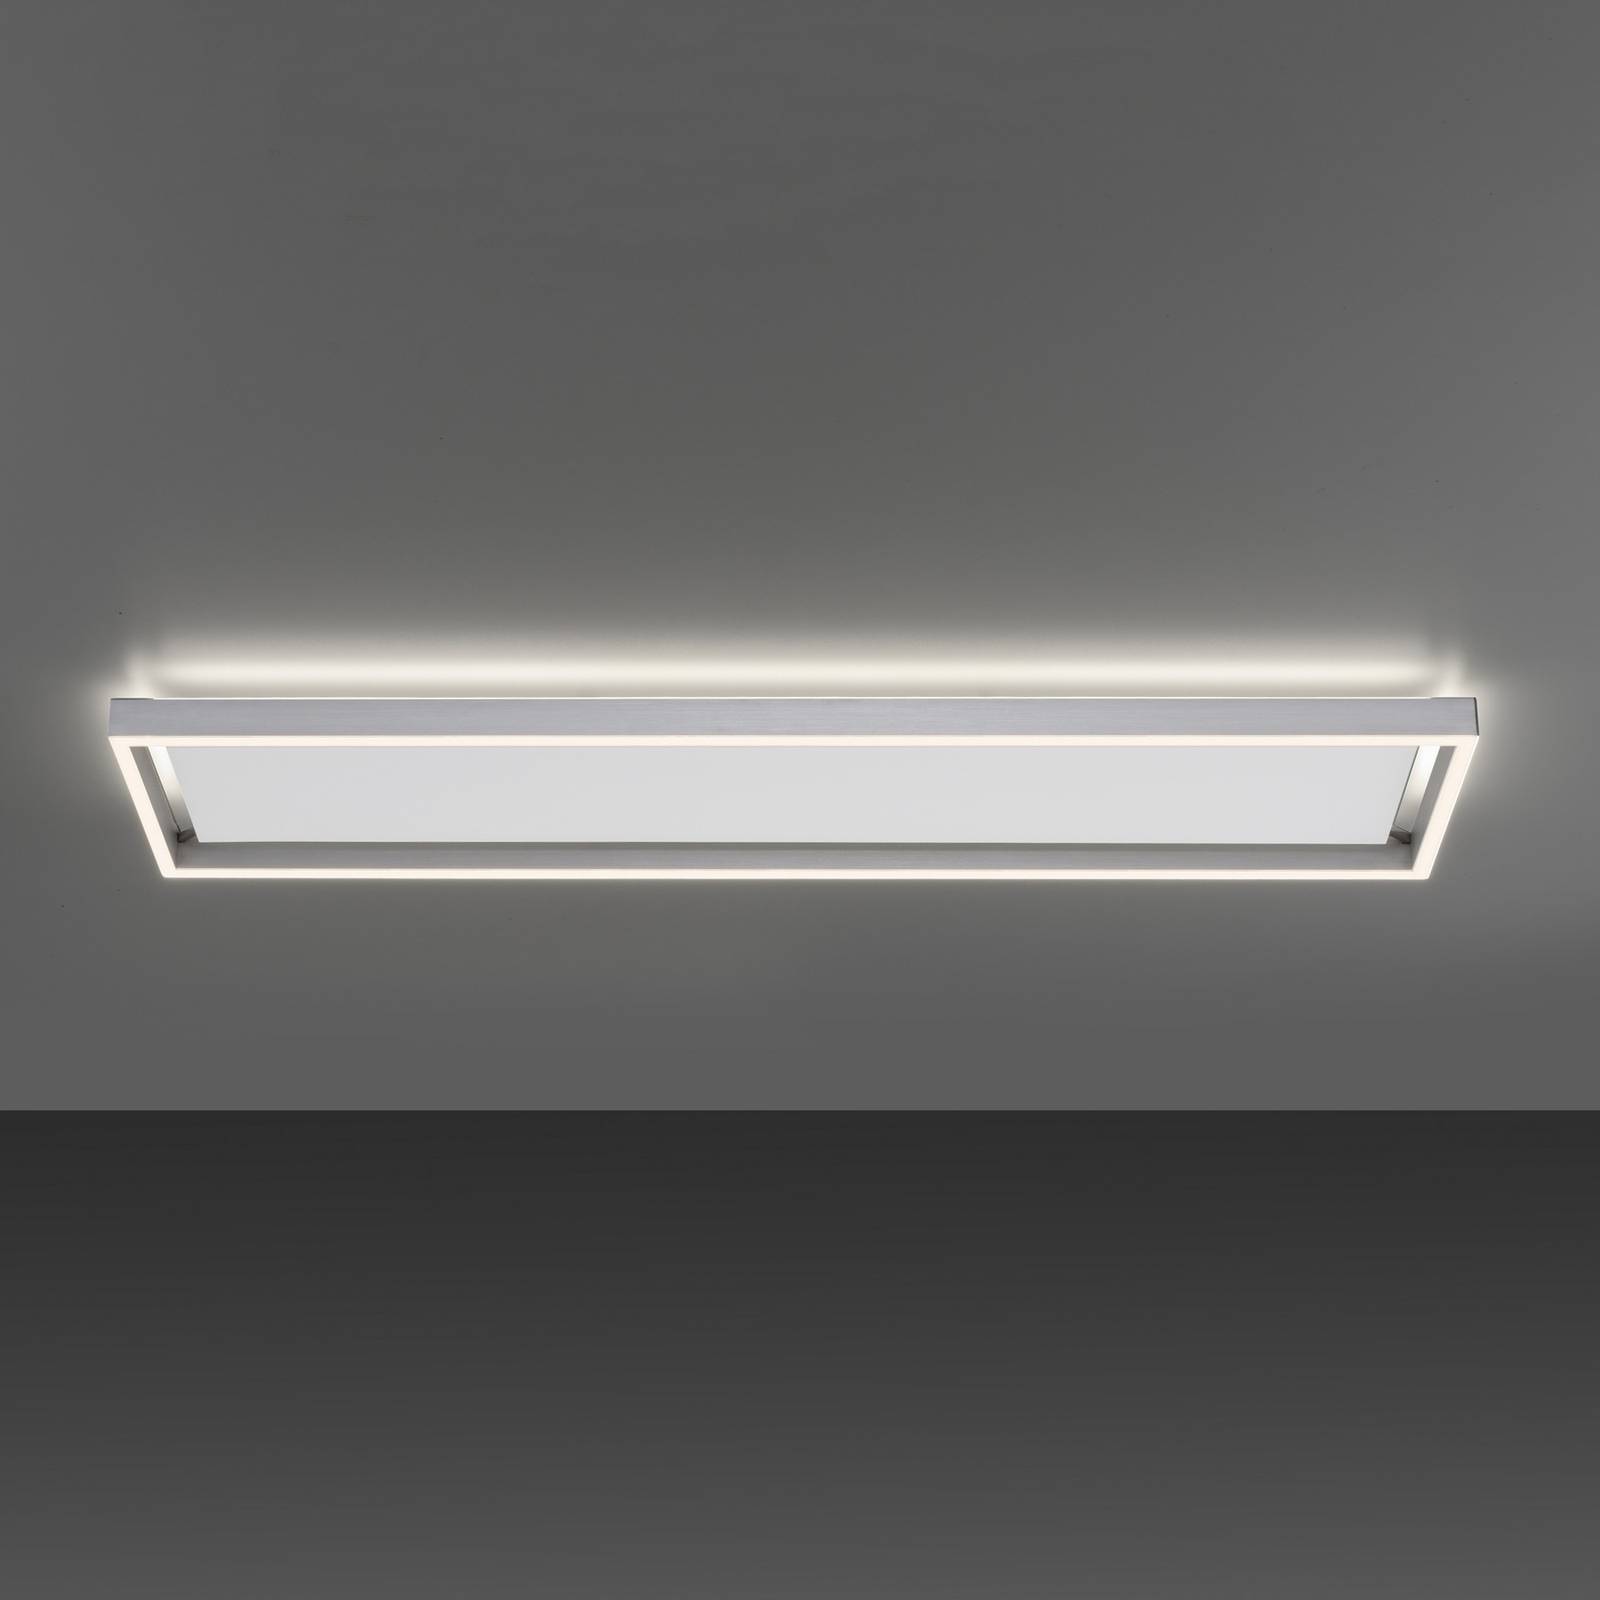 Image of Q-Smart-Home Paul Neuhaus Q-KAAN plafonnier LED, 100x25cm 4012248359242